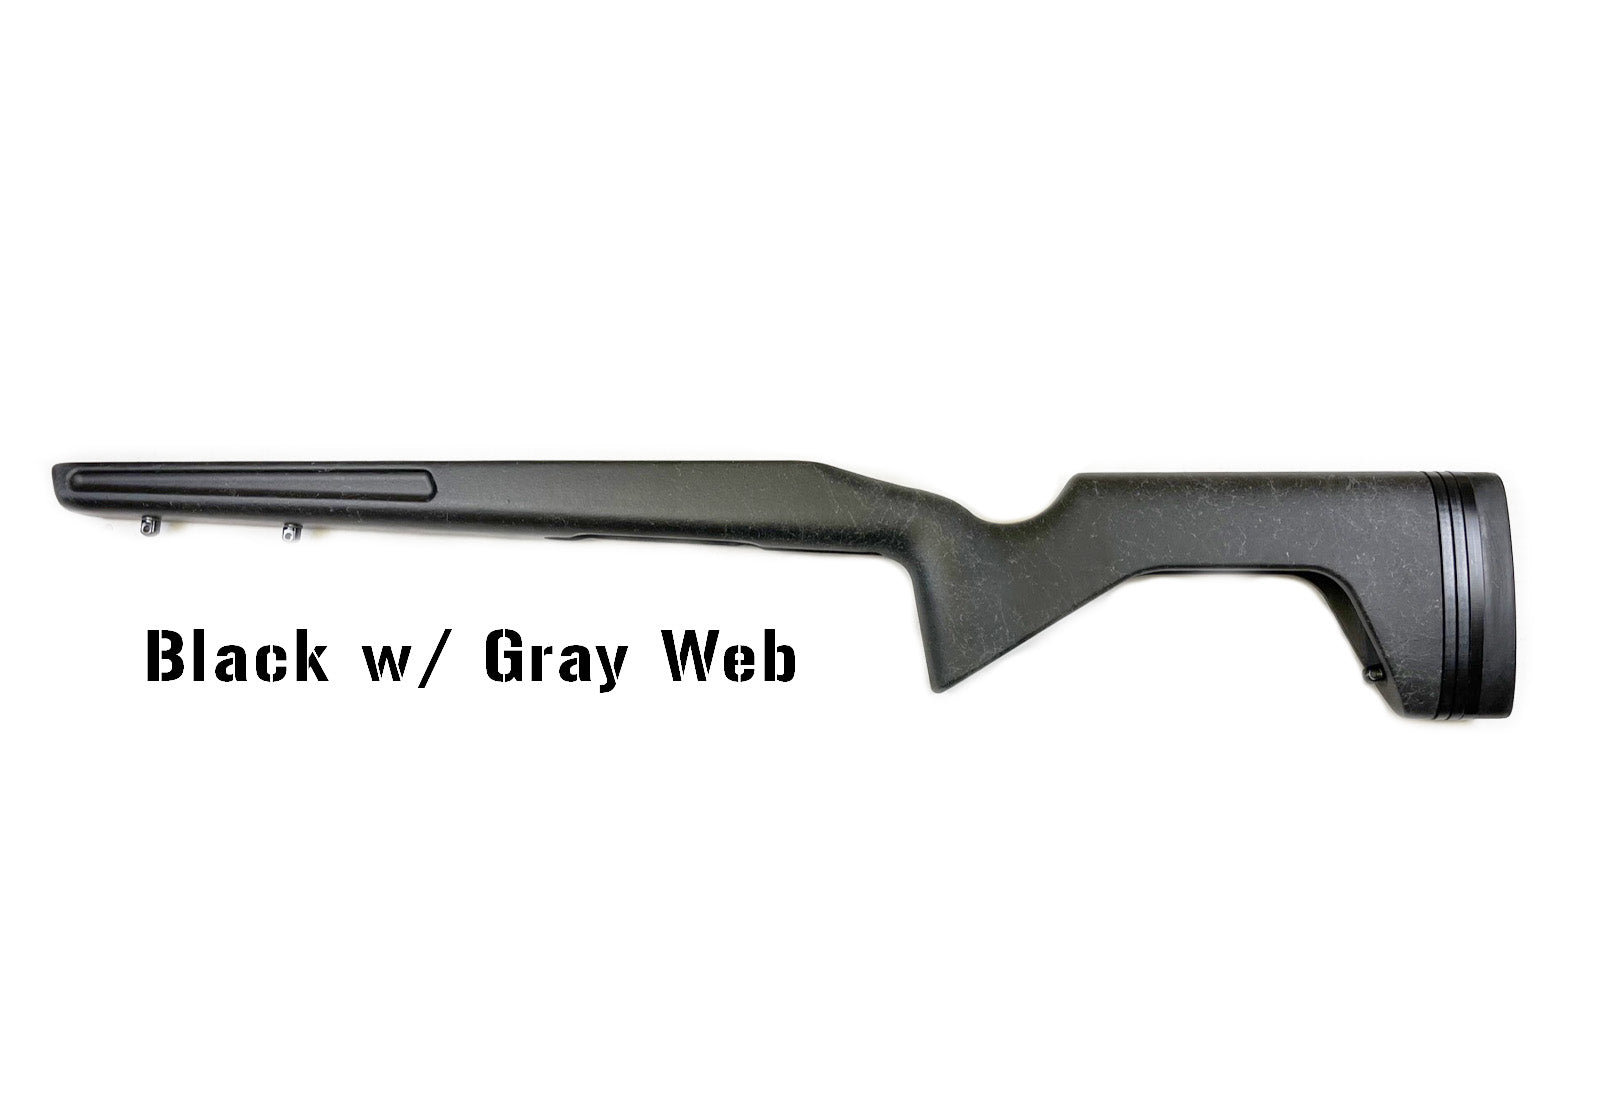 Grayboe Trekker - lightweight rifle stock for hunting & competition shooting - black rifle stock